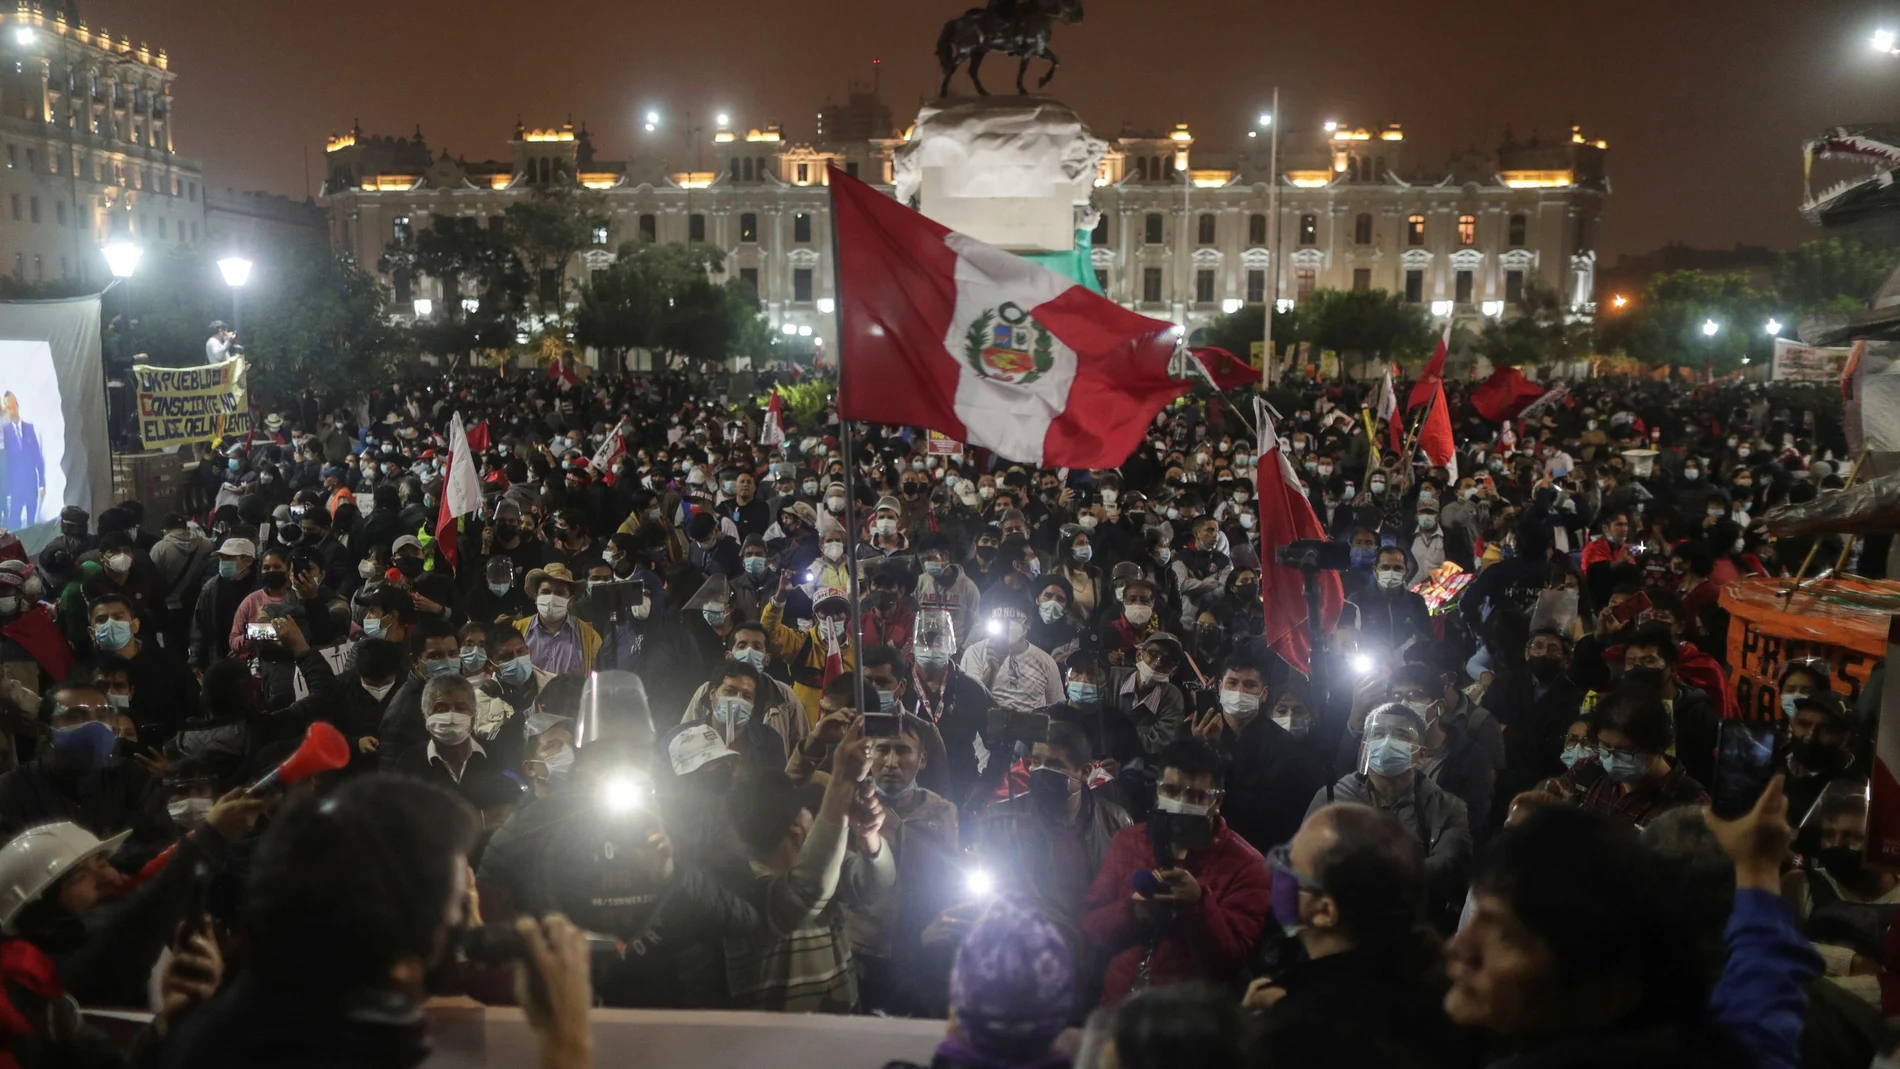 Protestors gather during a demonstration against Peru's presidential candidate Keiko Fujimori ahead of the June 6 run-off election between Fujimori and Pedro Castillo, in Lima, Peru June 1, 2021. REUTERS/Sebastian Castaneda